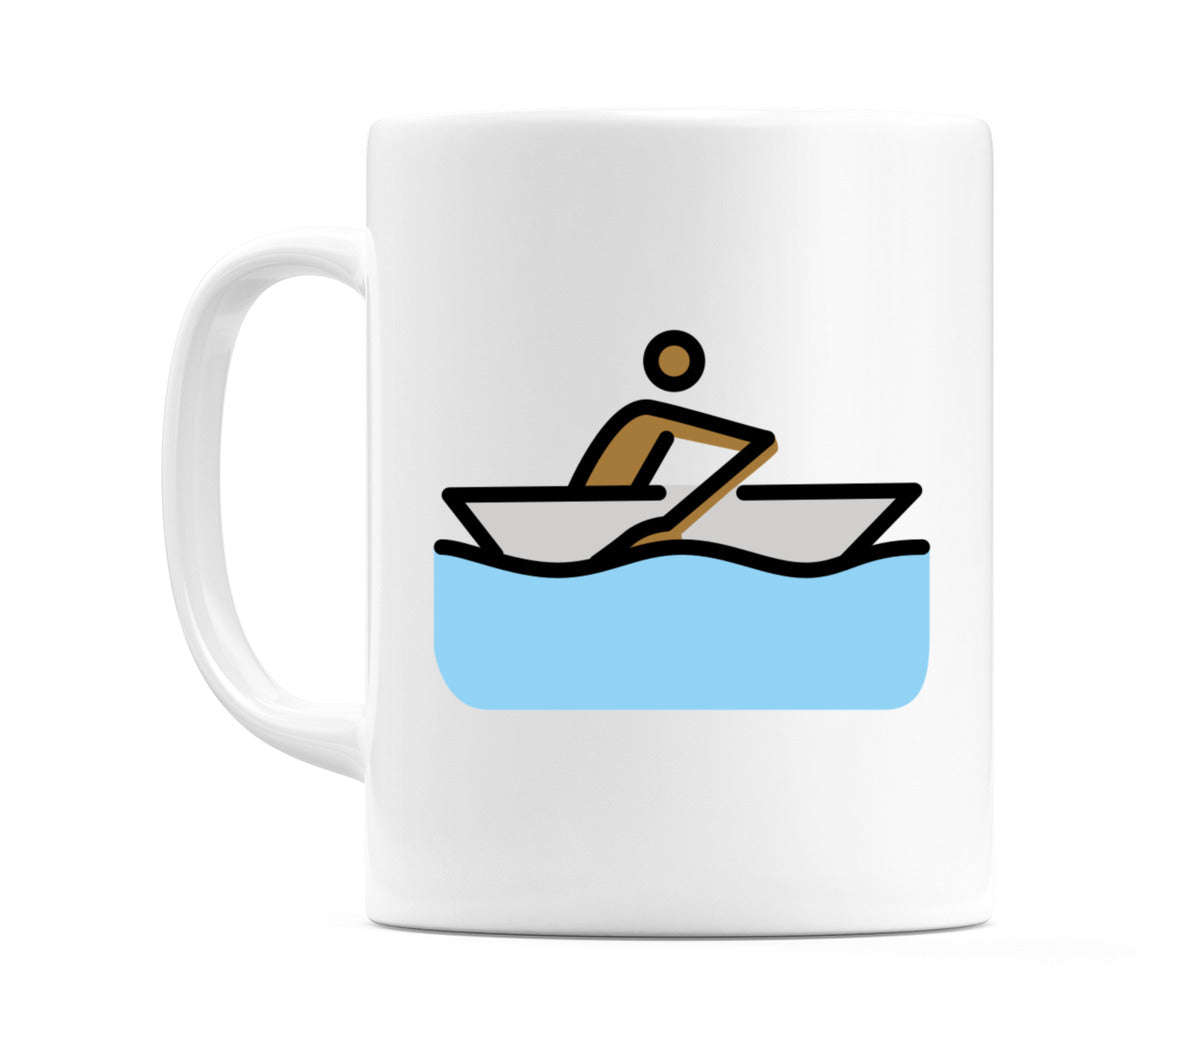 Person Rowing Boat: Medium-Dark Skin Tone Emoji Mug